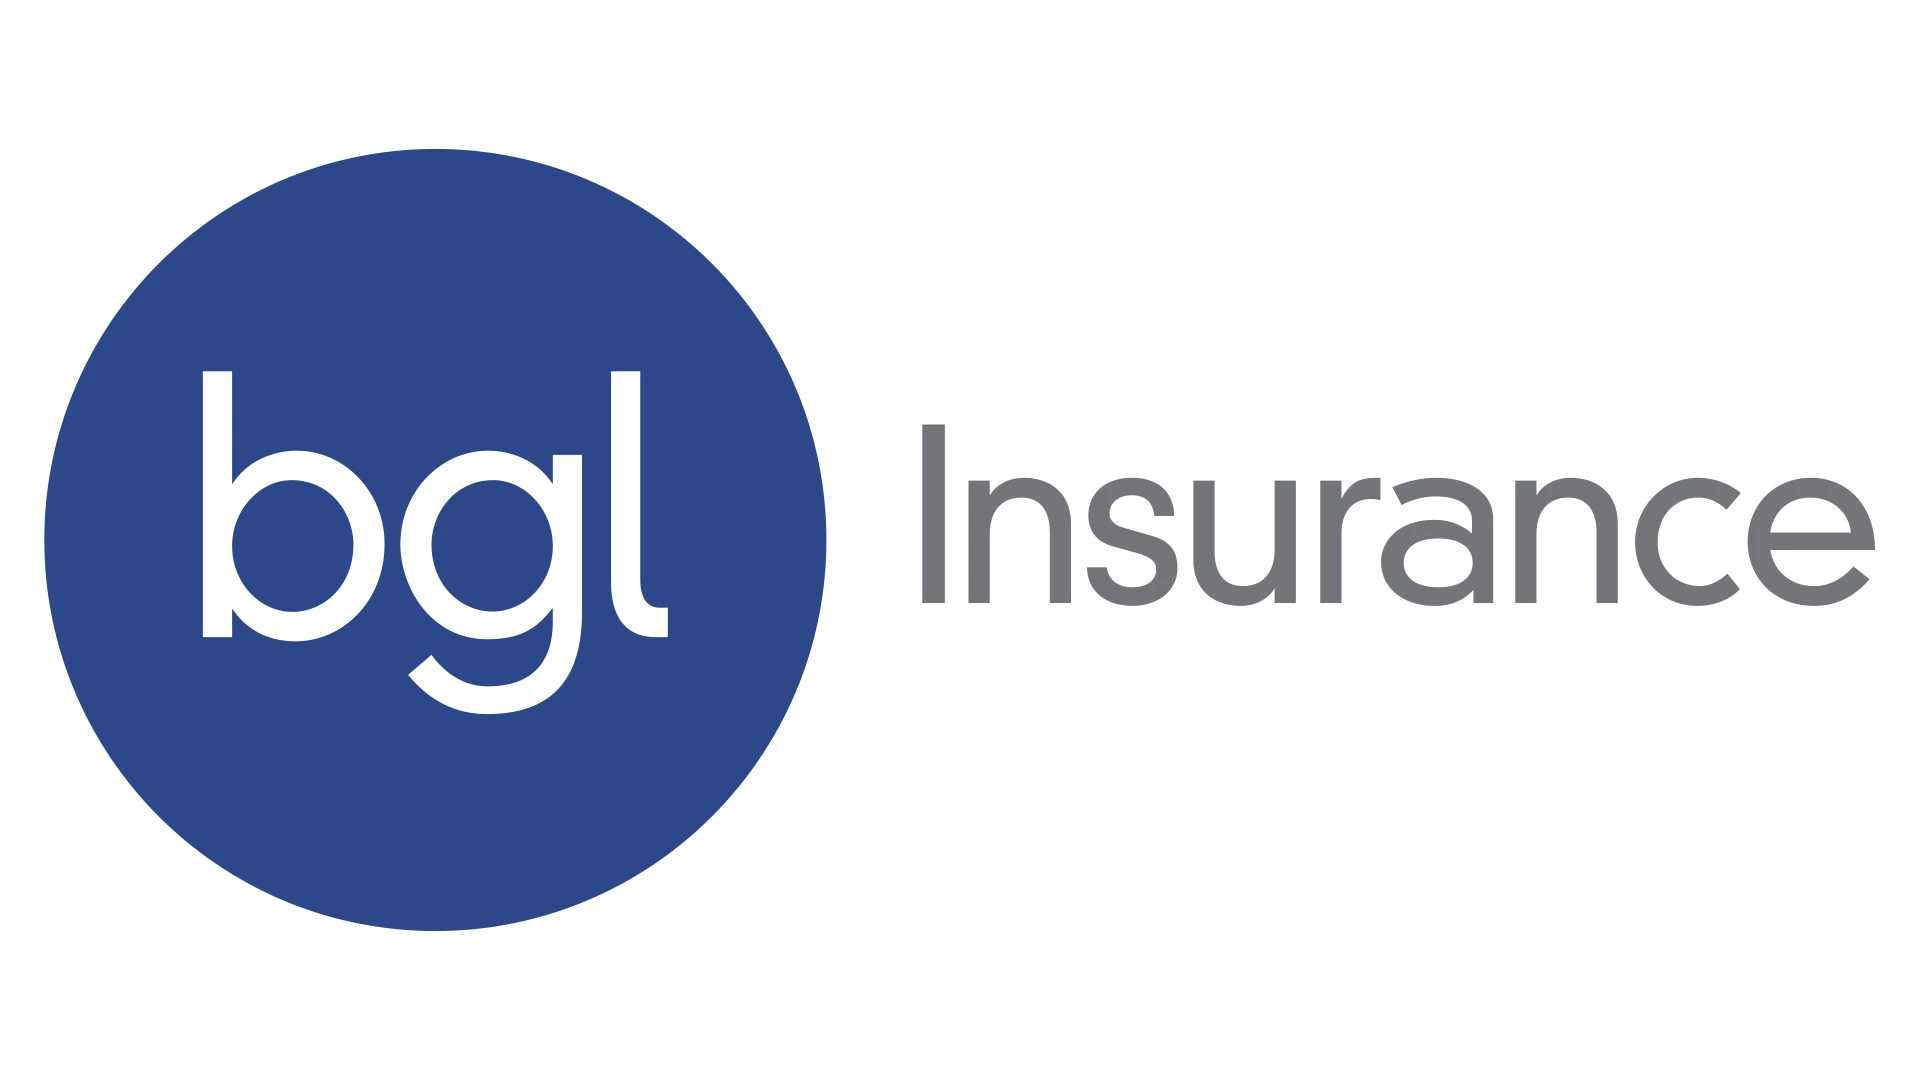 BGL Insurance